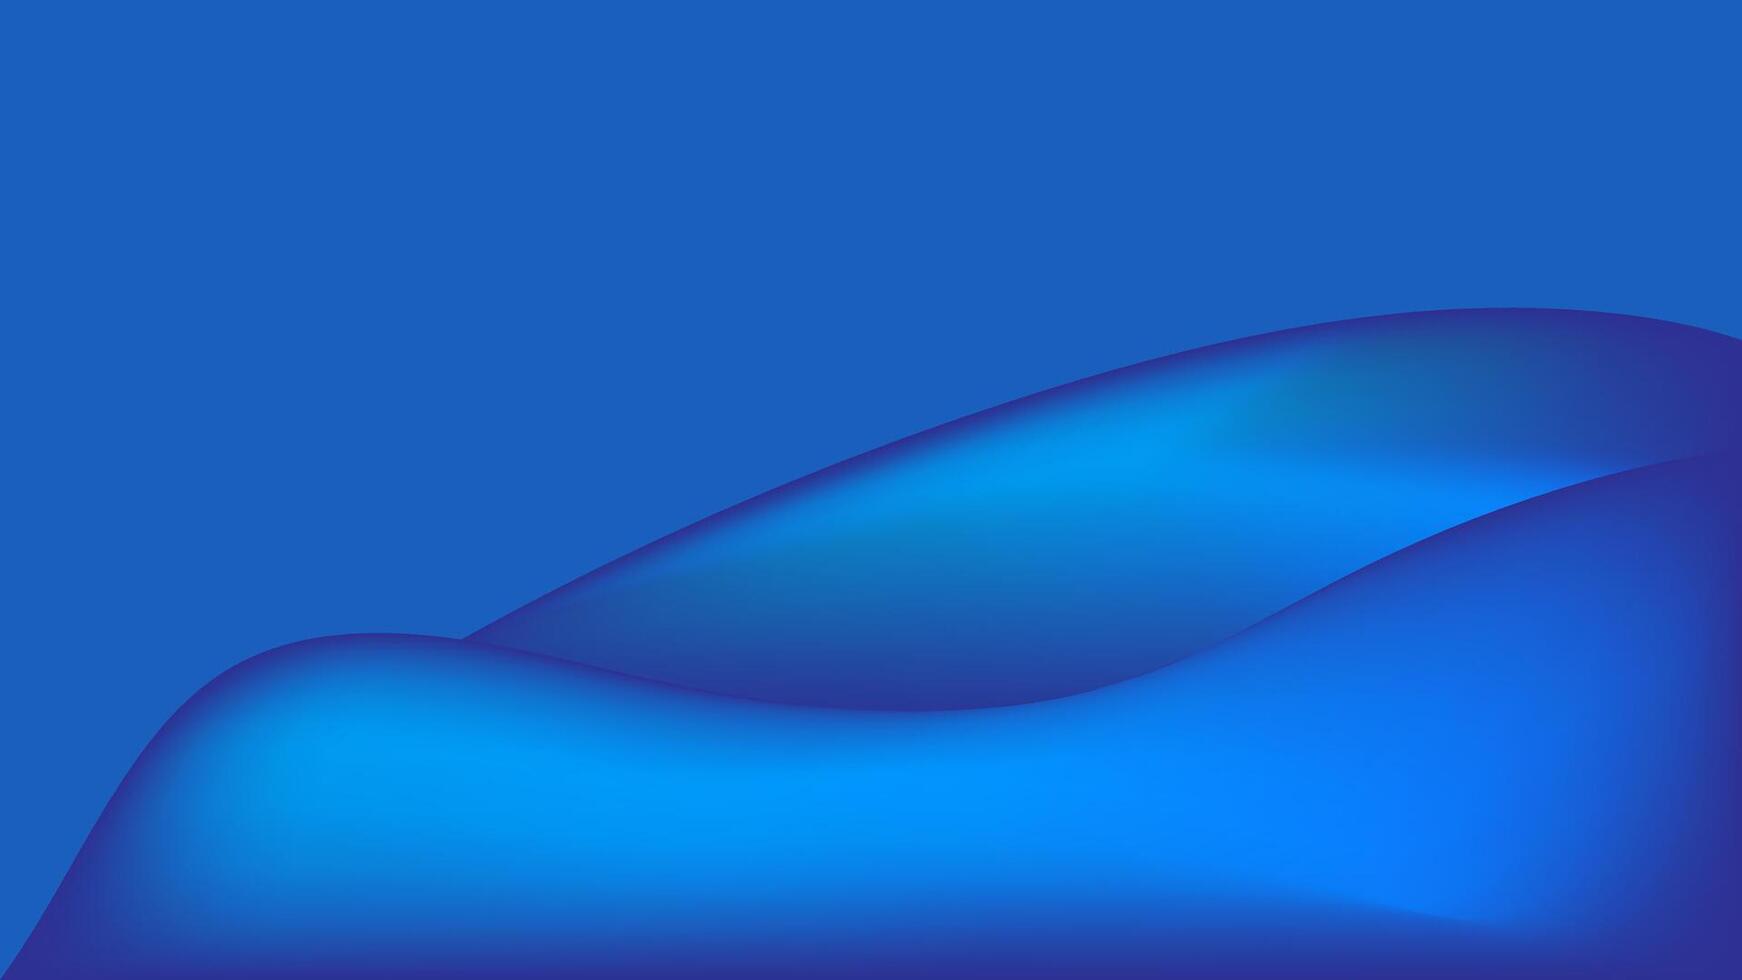 abstract meetkundig achtergrond helling blauw kleur met meetkundig vormen ontwerp vector sjabloon mooi zo voor modern website, behang, Hoes ontwerp